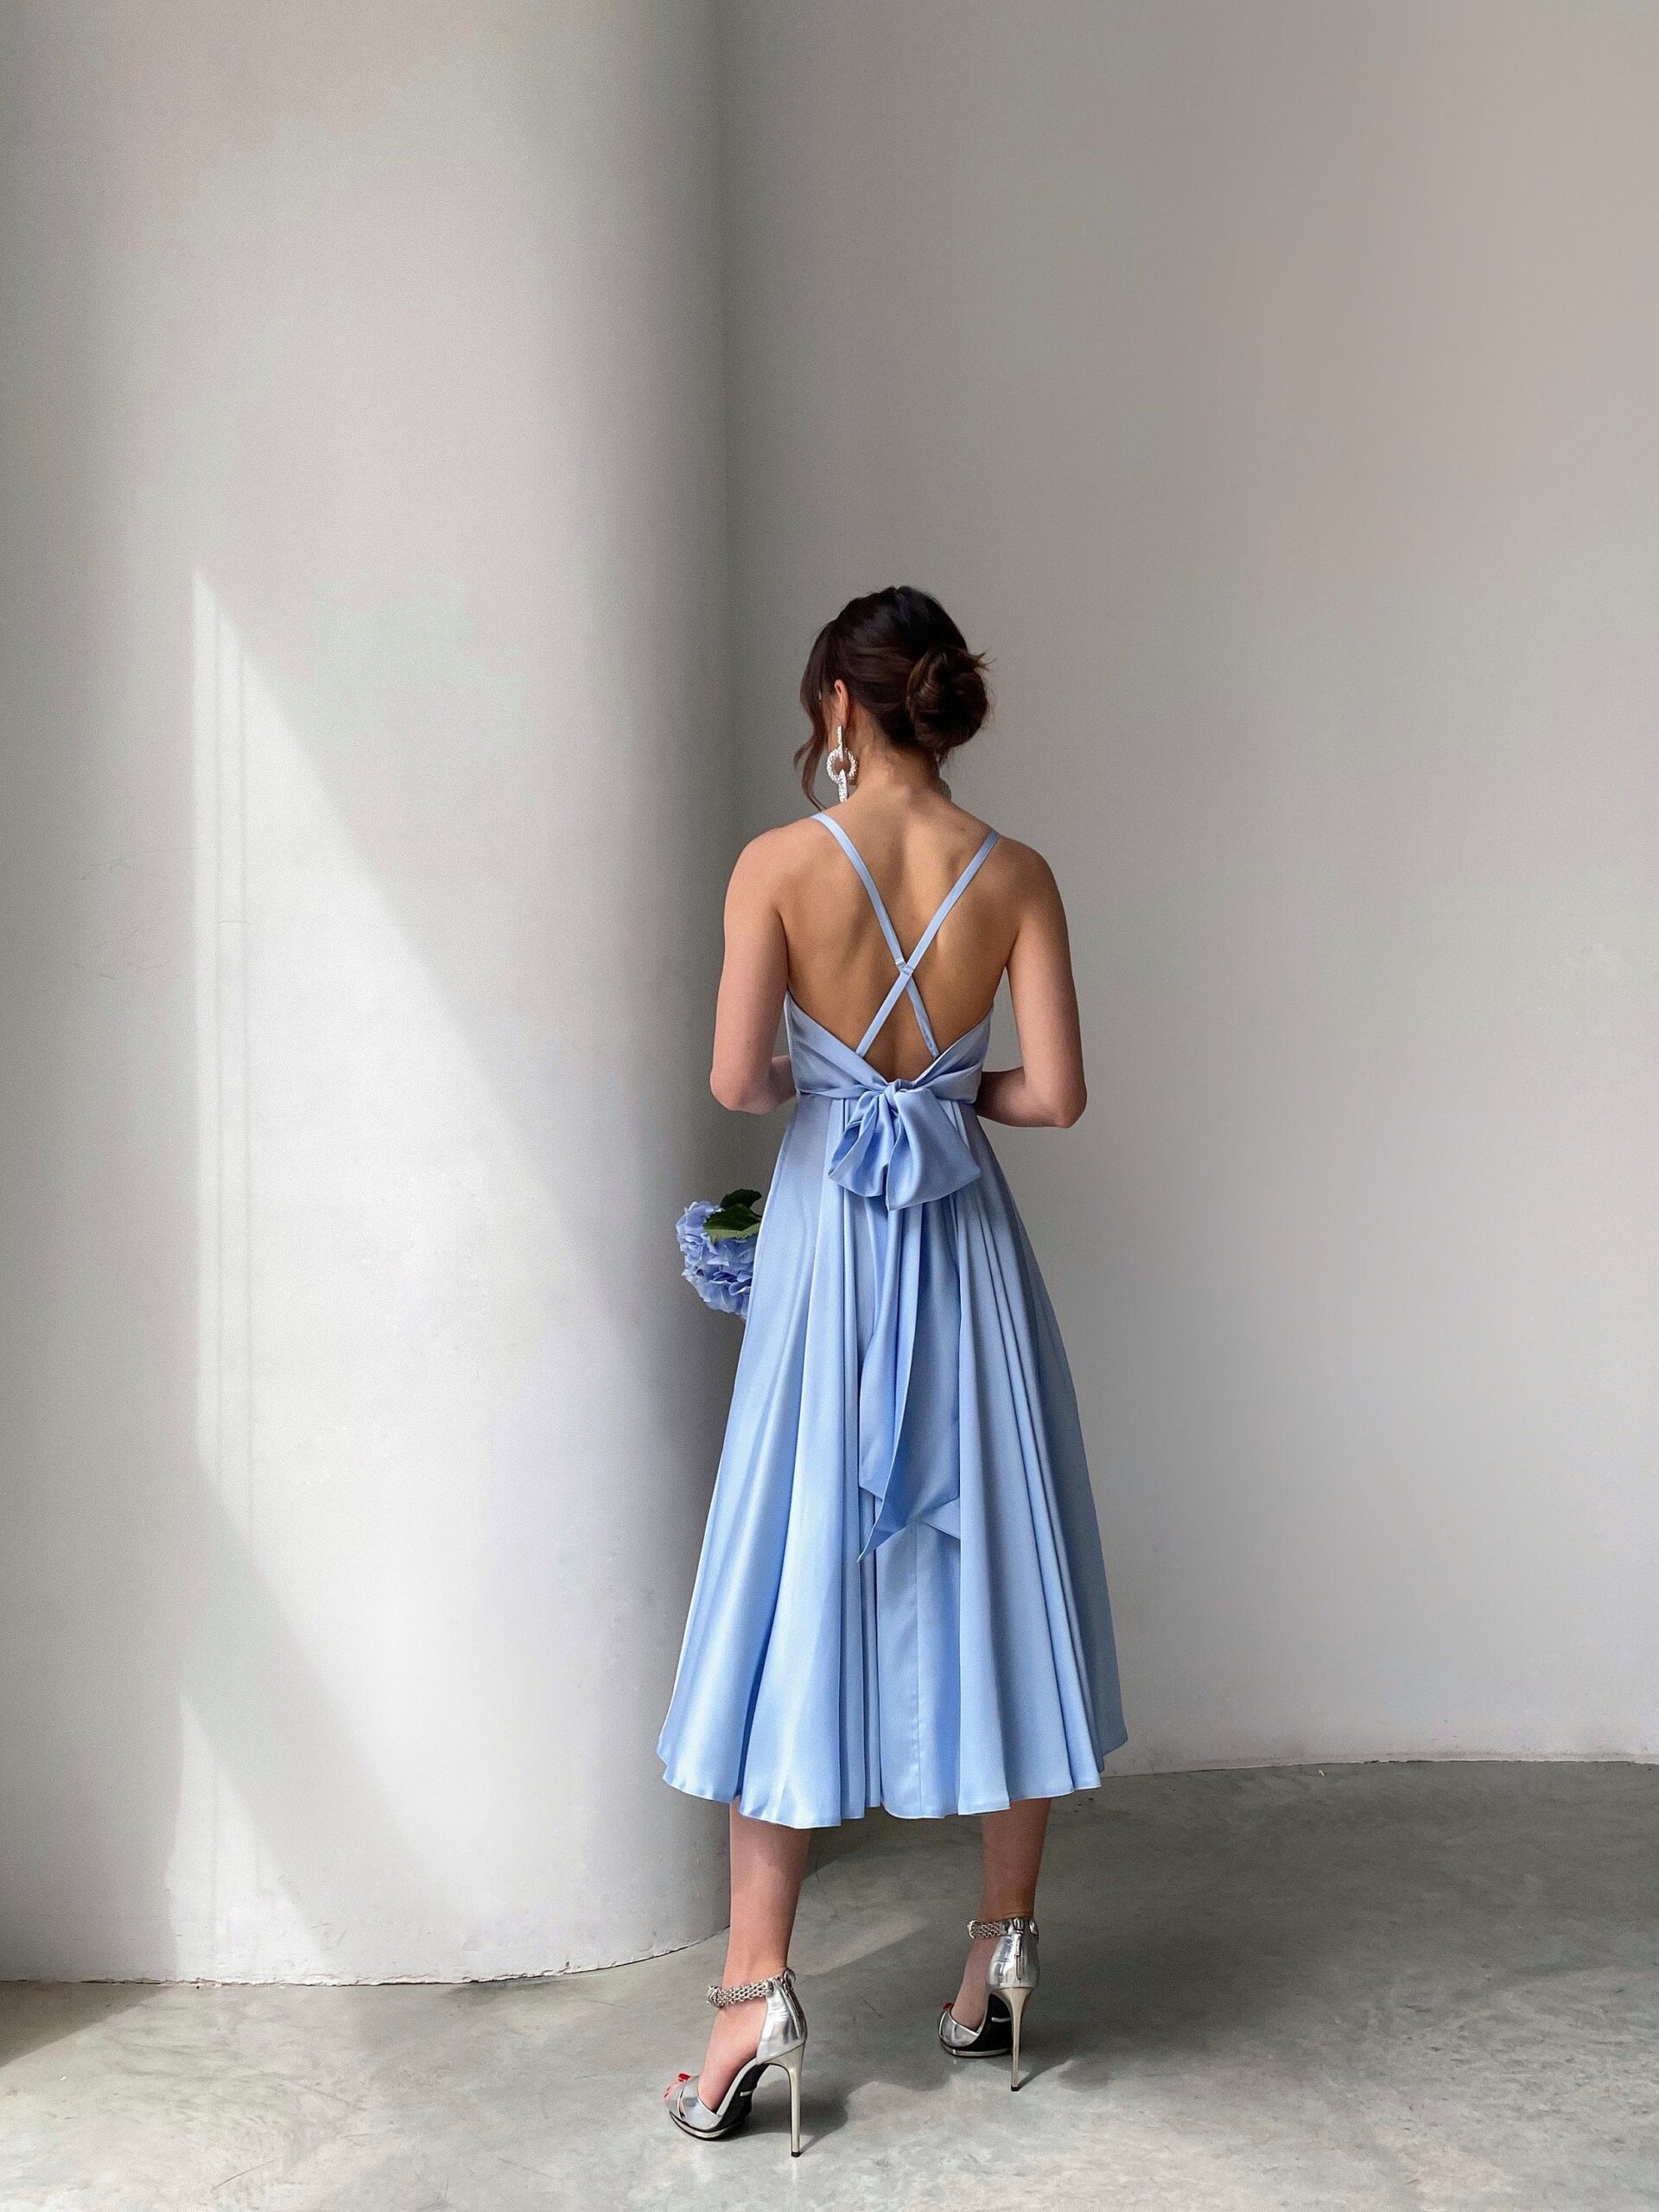 Stunning Ways to Style a Light Blue Midi
Dress